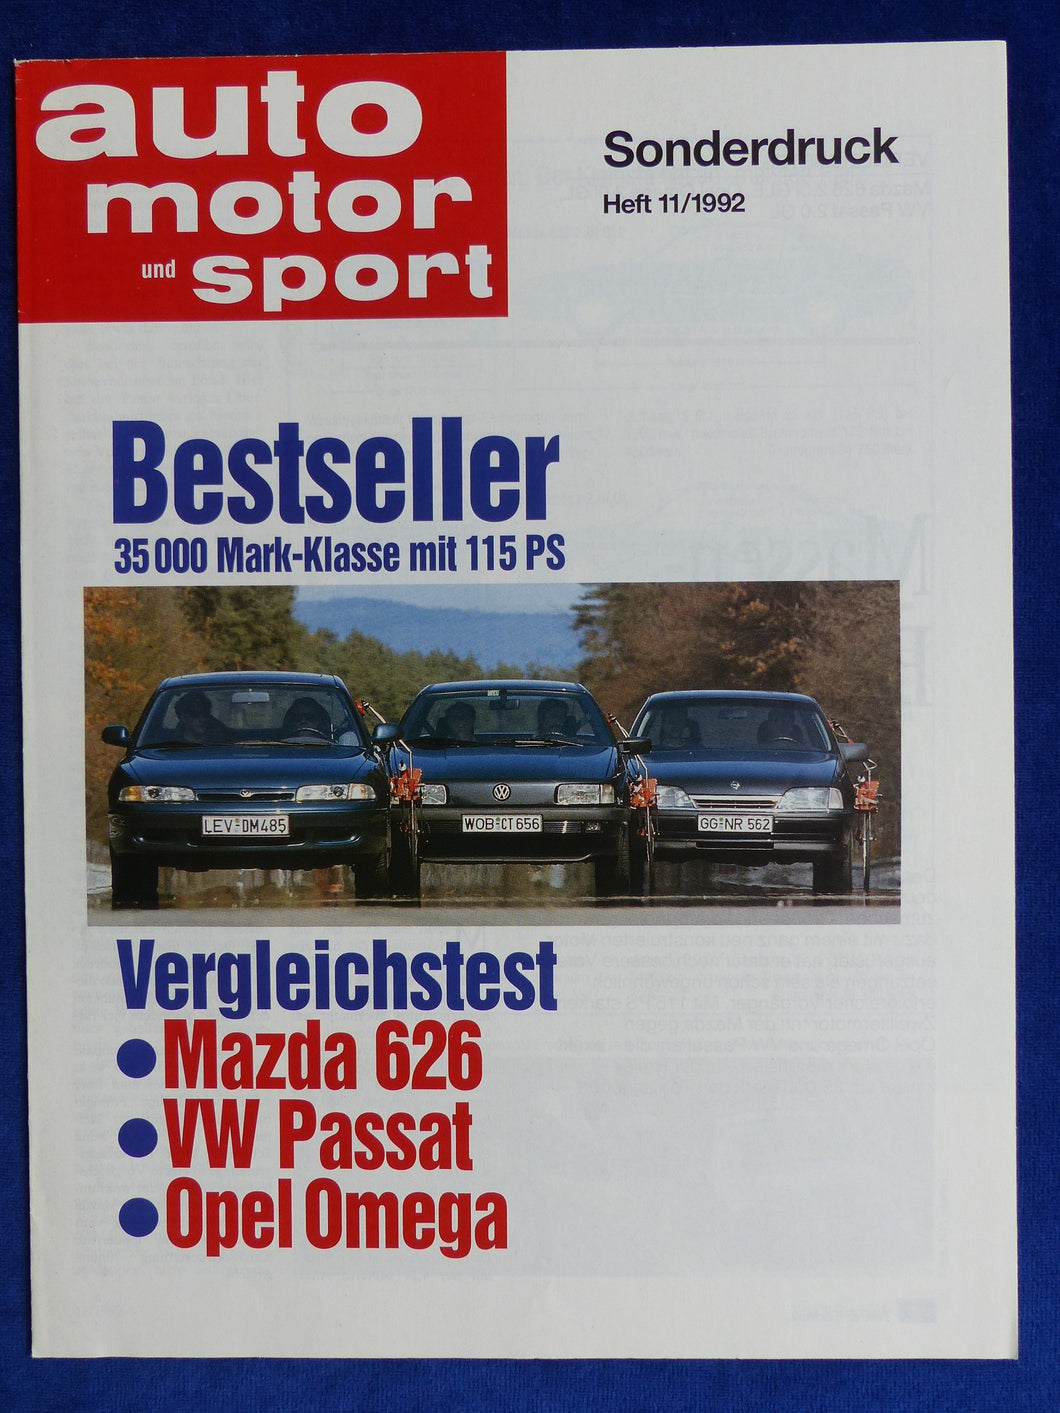 Mazda 626 VW Passat Opel Omega Vergleichstest - Sonderdruck AMS Heft 11/1992 - car-brochure